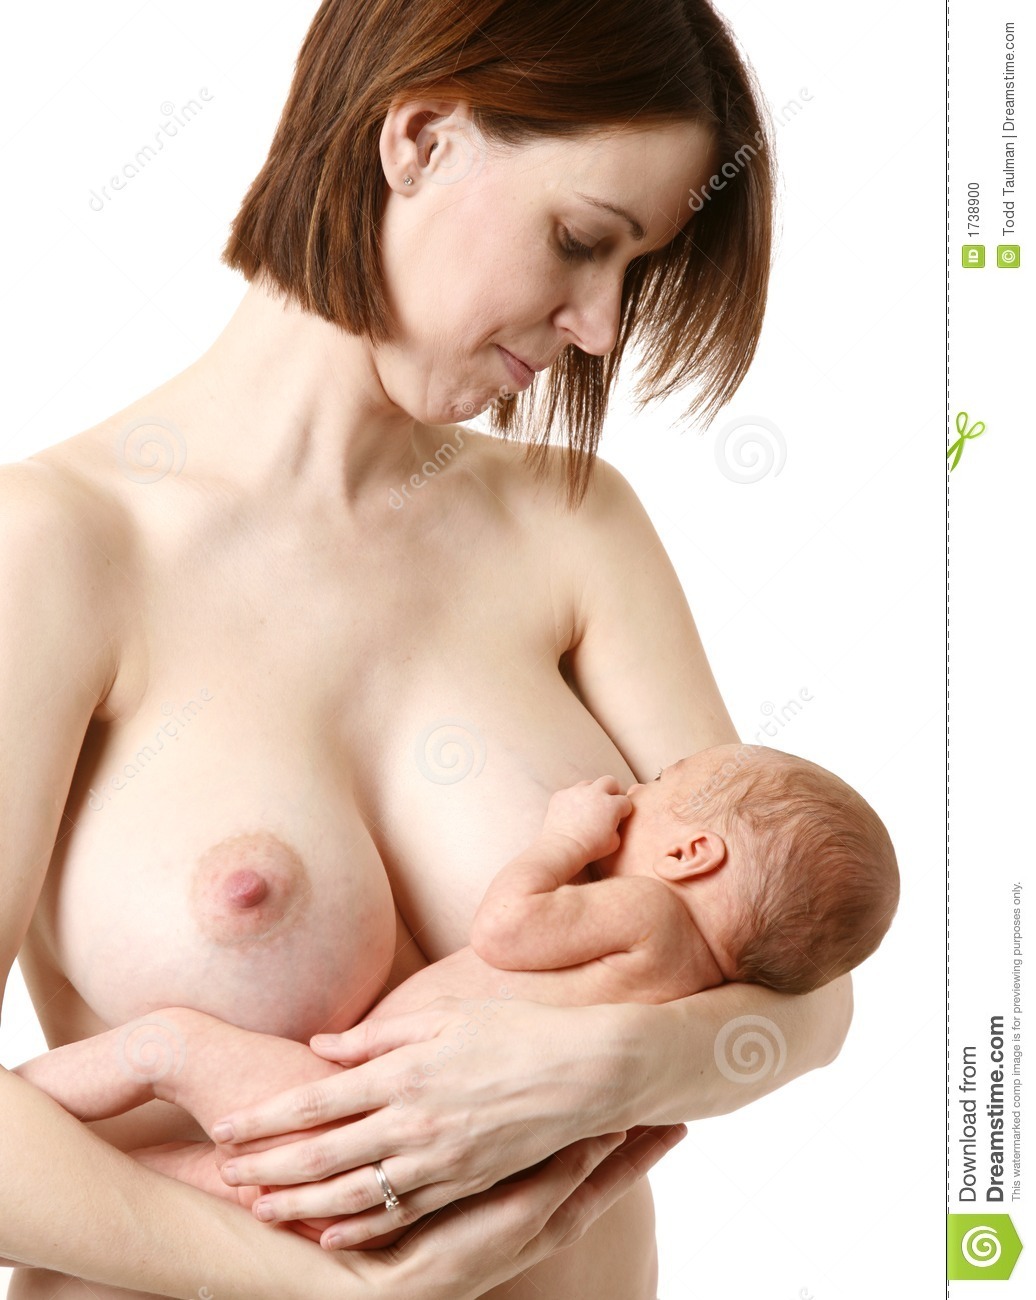 Mom let son suck her breast milk